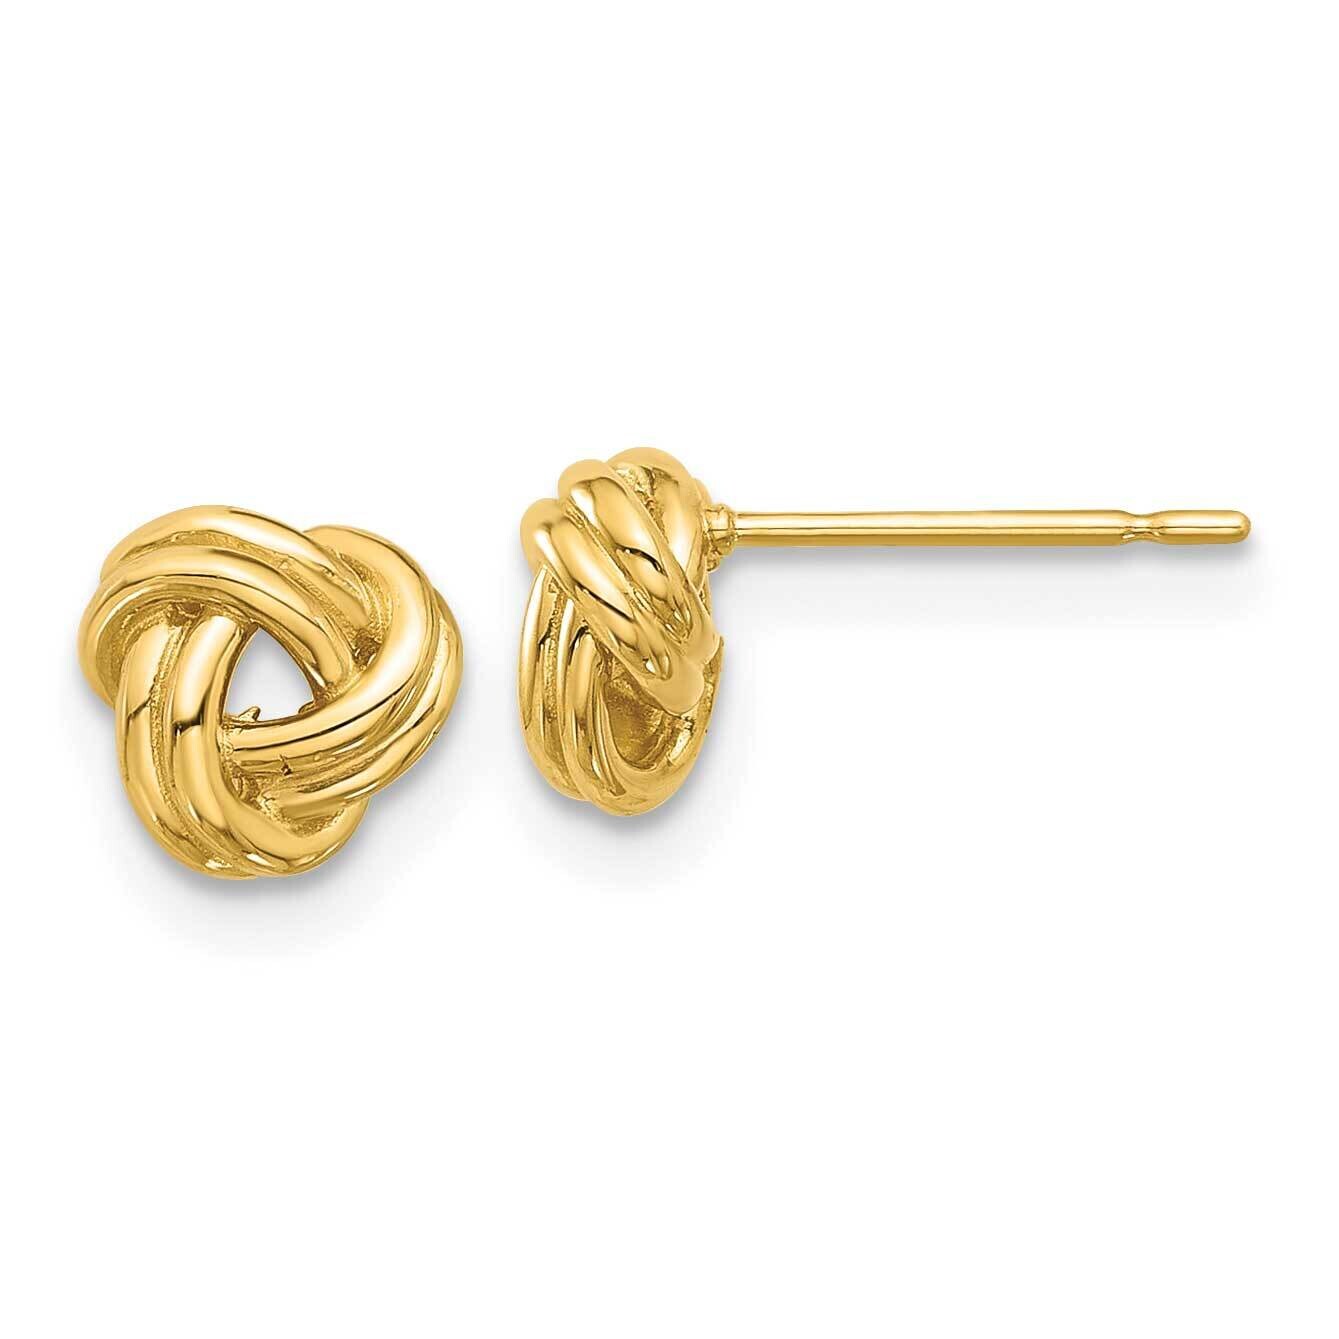 Madi K Polished Love Knot Post Earrings 14k Gold GK1185